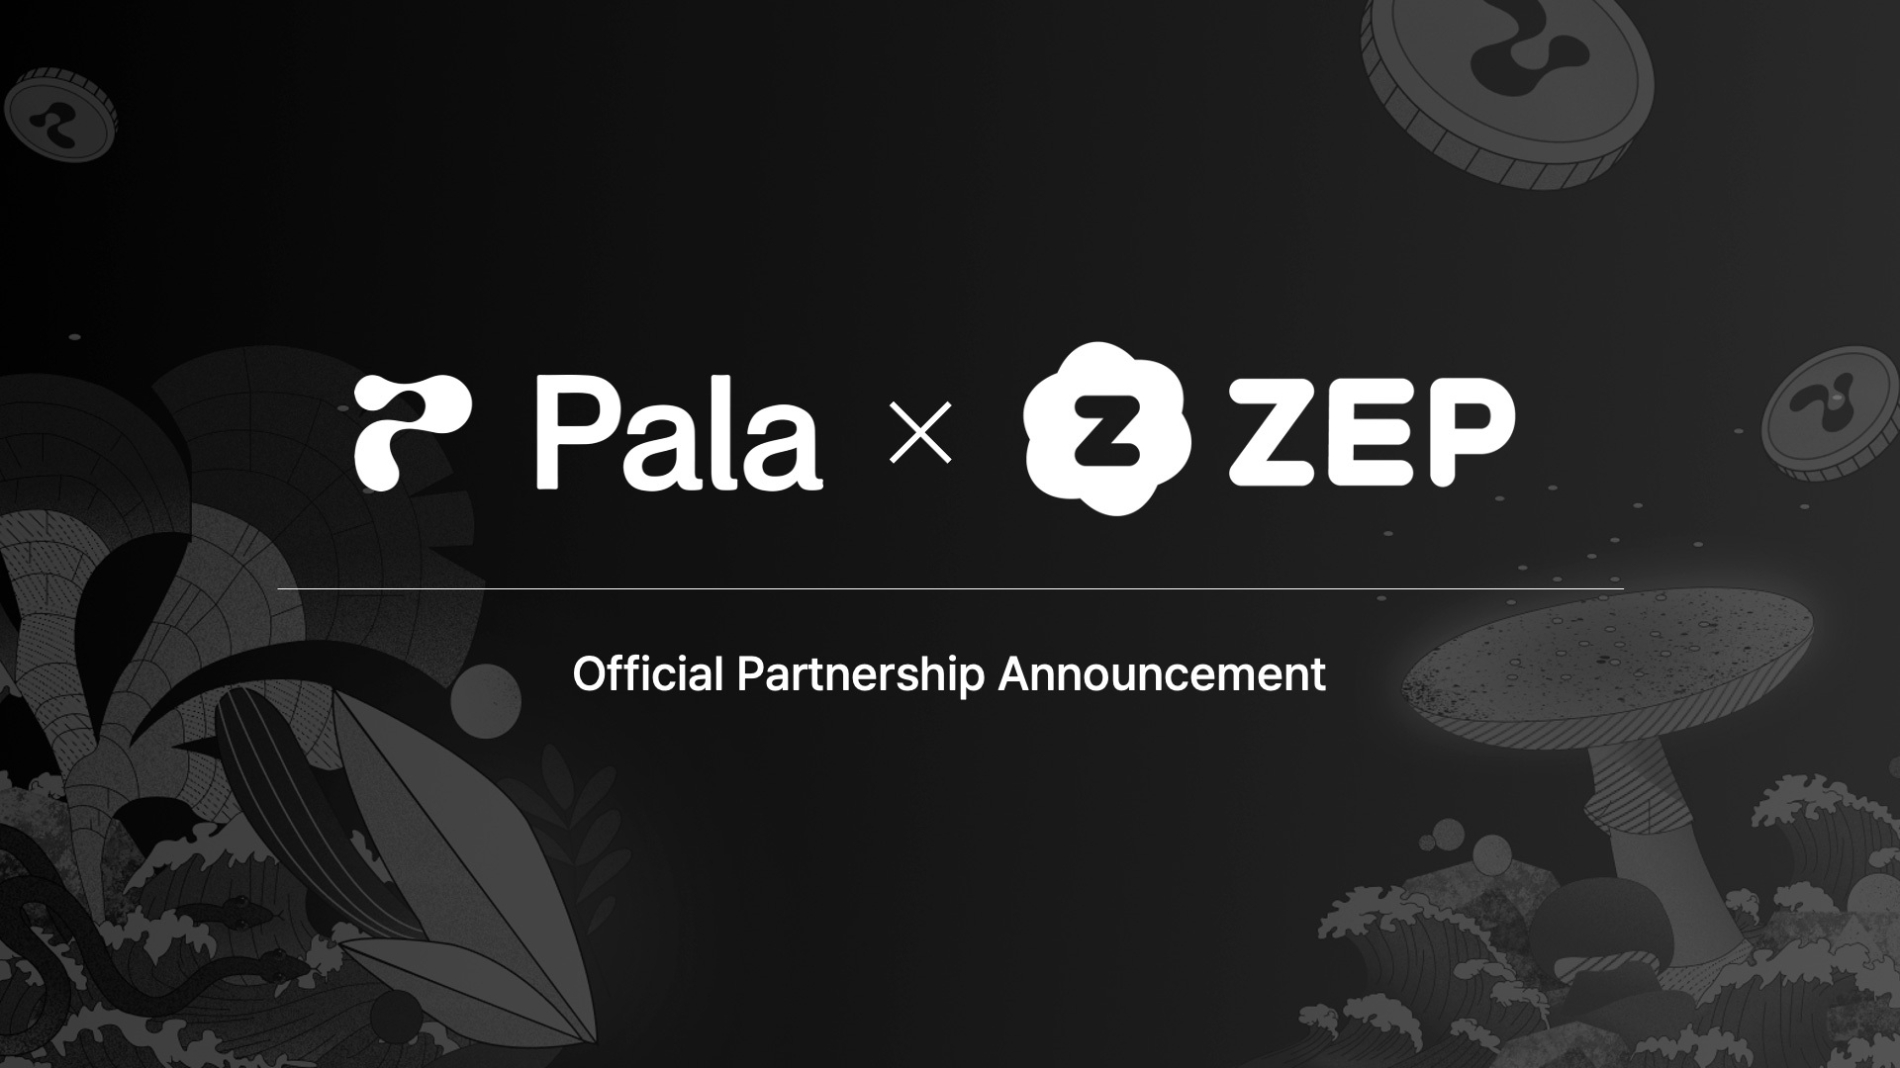 Pala(팔라), 메타버스 플랫폼 ZEP과 MOU 체결... NFT 포함한 블록체인 관련 기술 및 사업 협력 계획